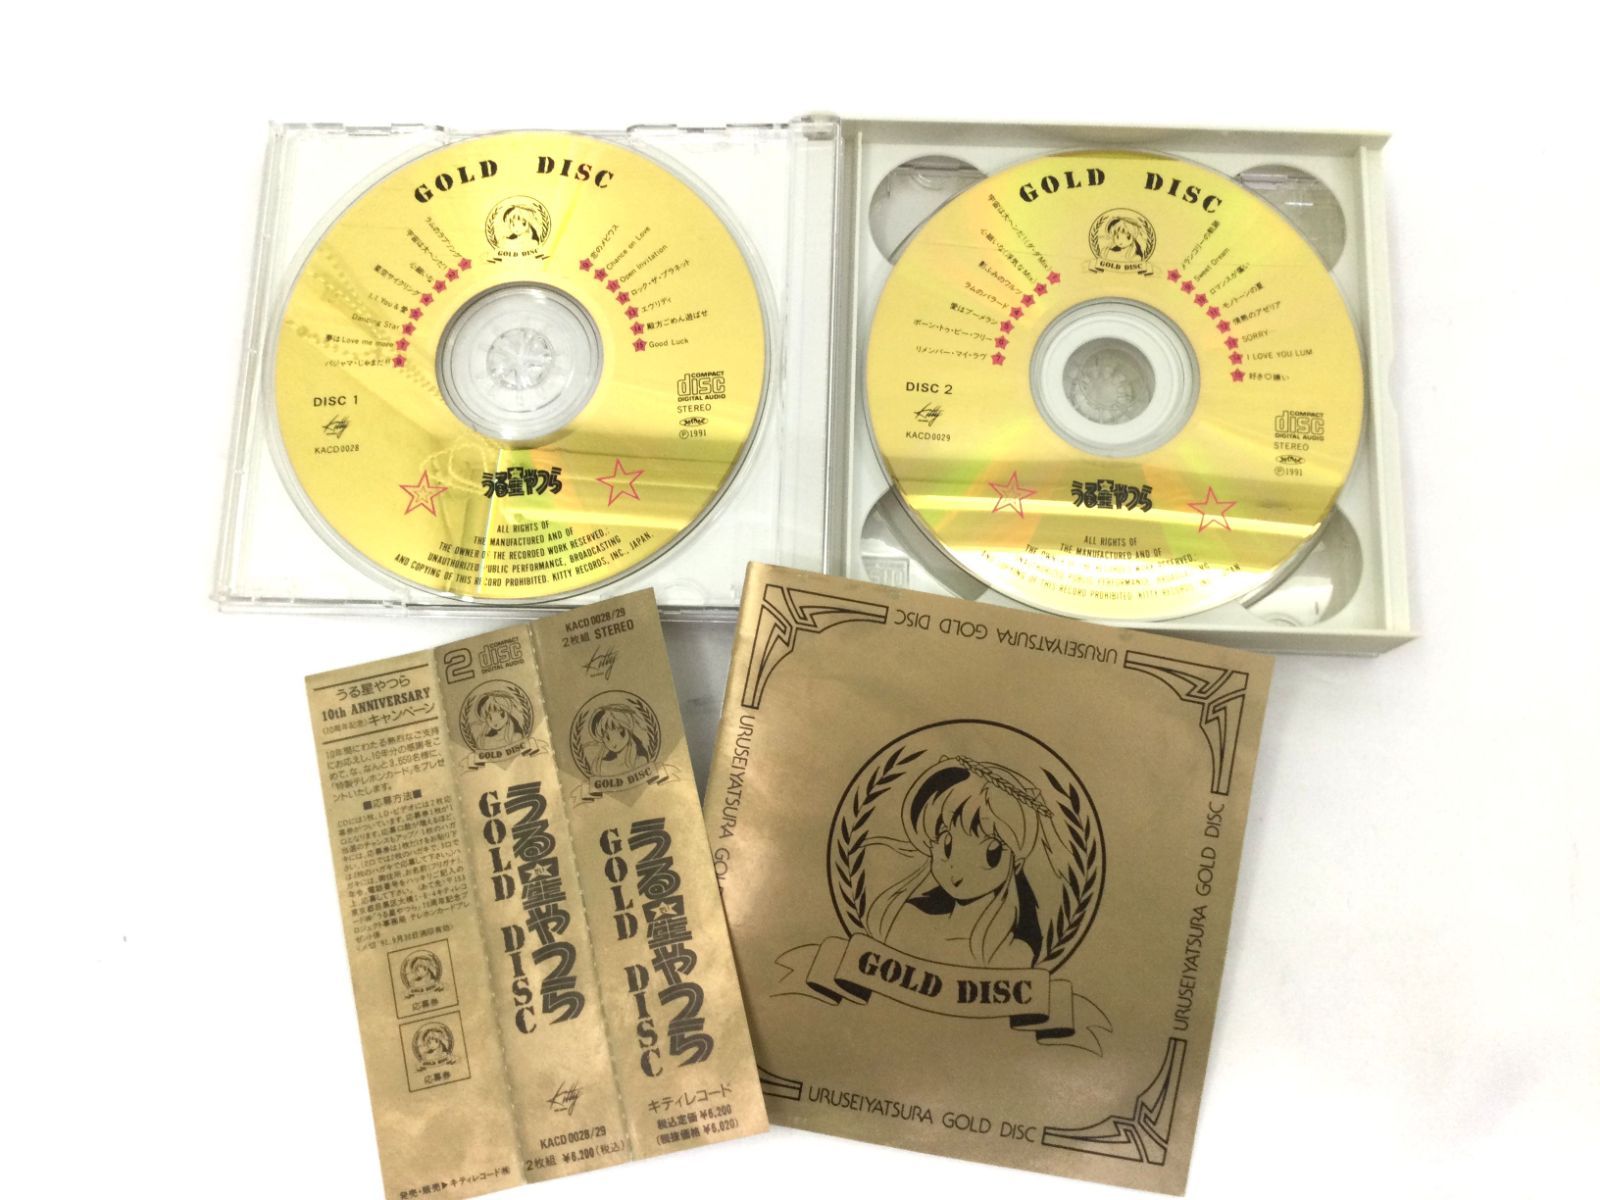 C0154】うる星やつら ゴールドディスク GOLD DISC 2枚組 KACD0028/29 